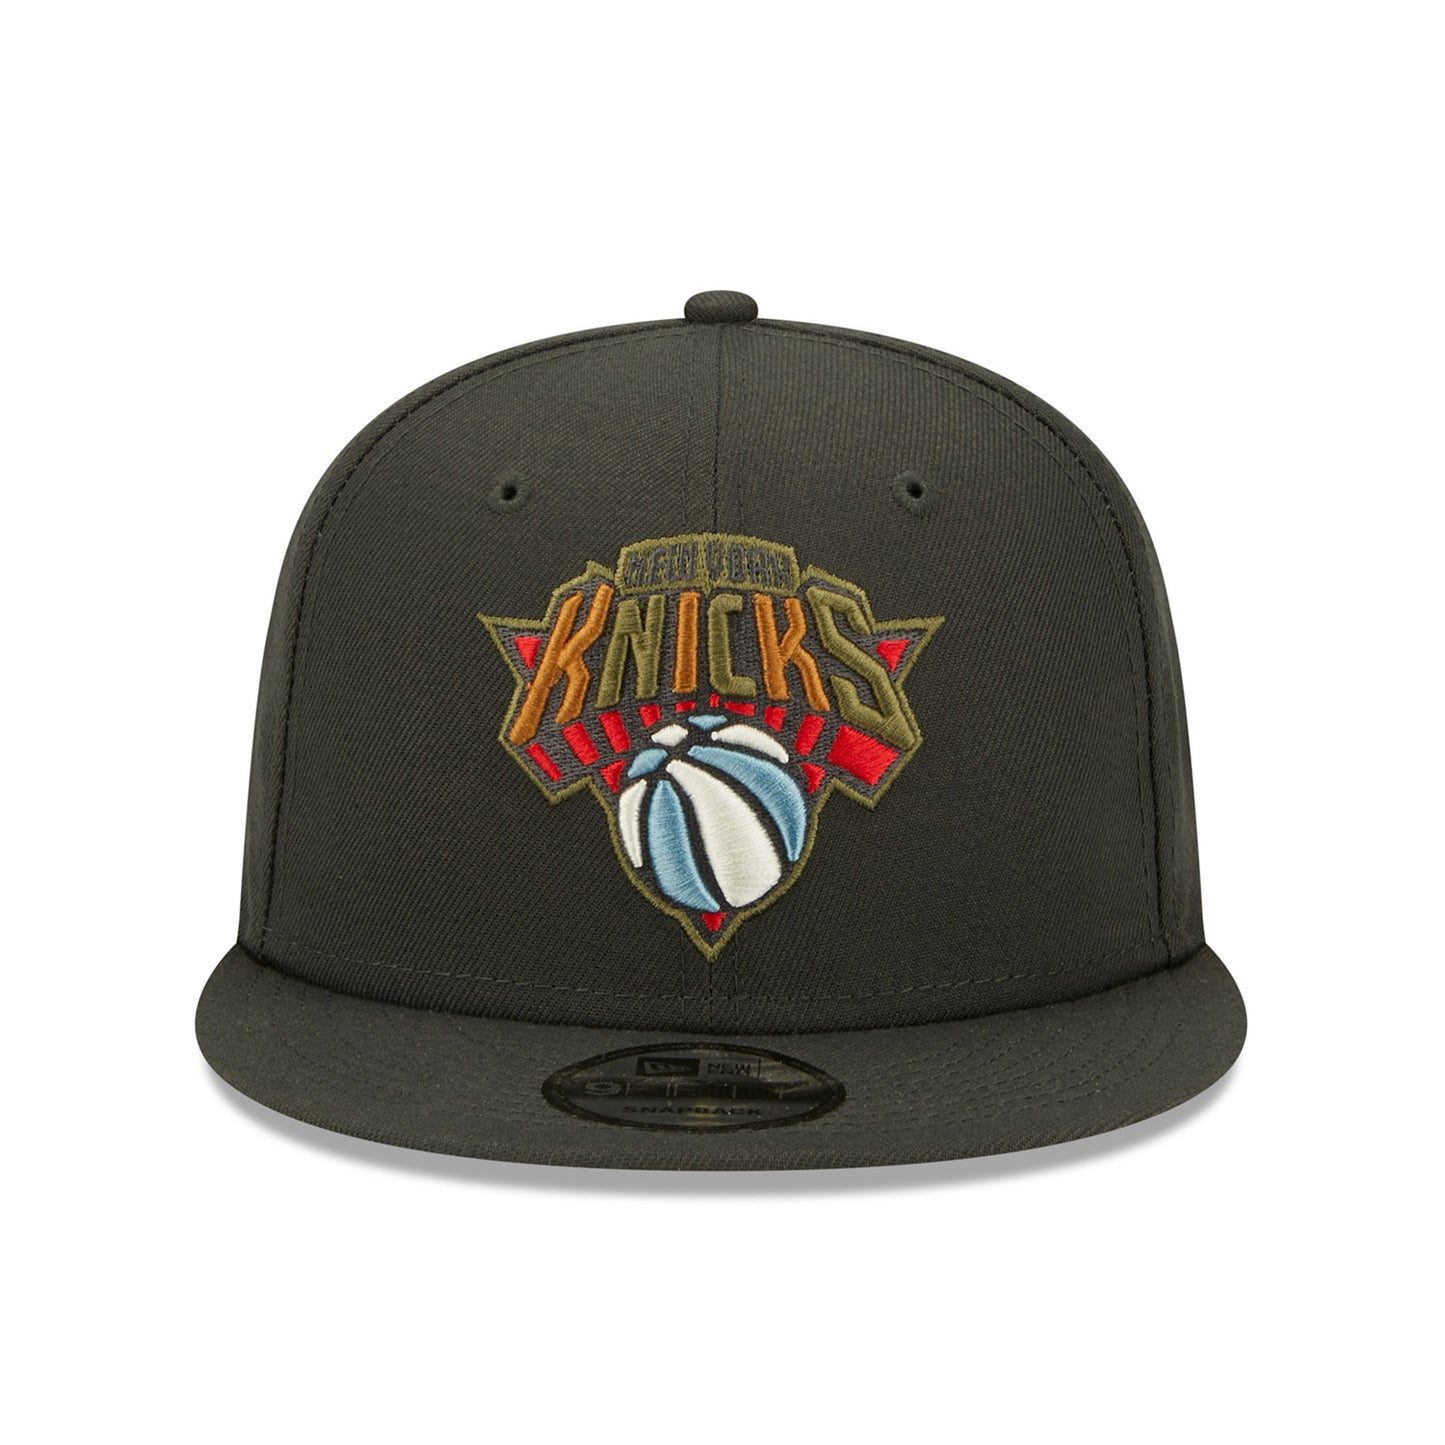 New Era Knicks Multi Color Logo Snapback - Front View